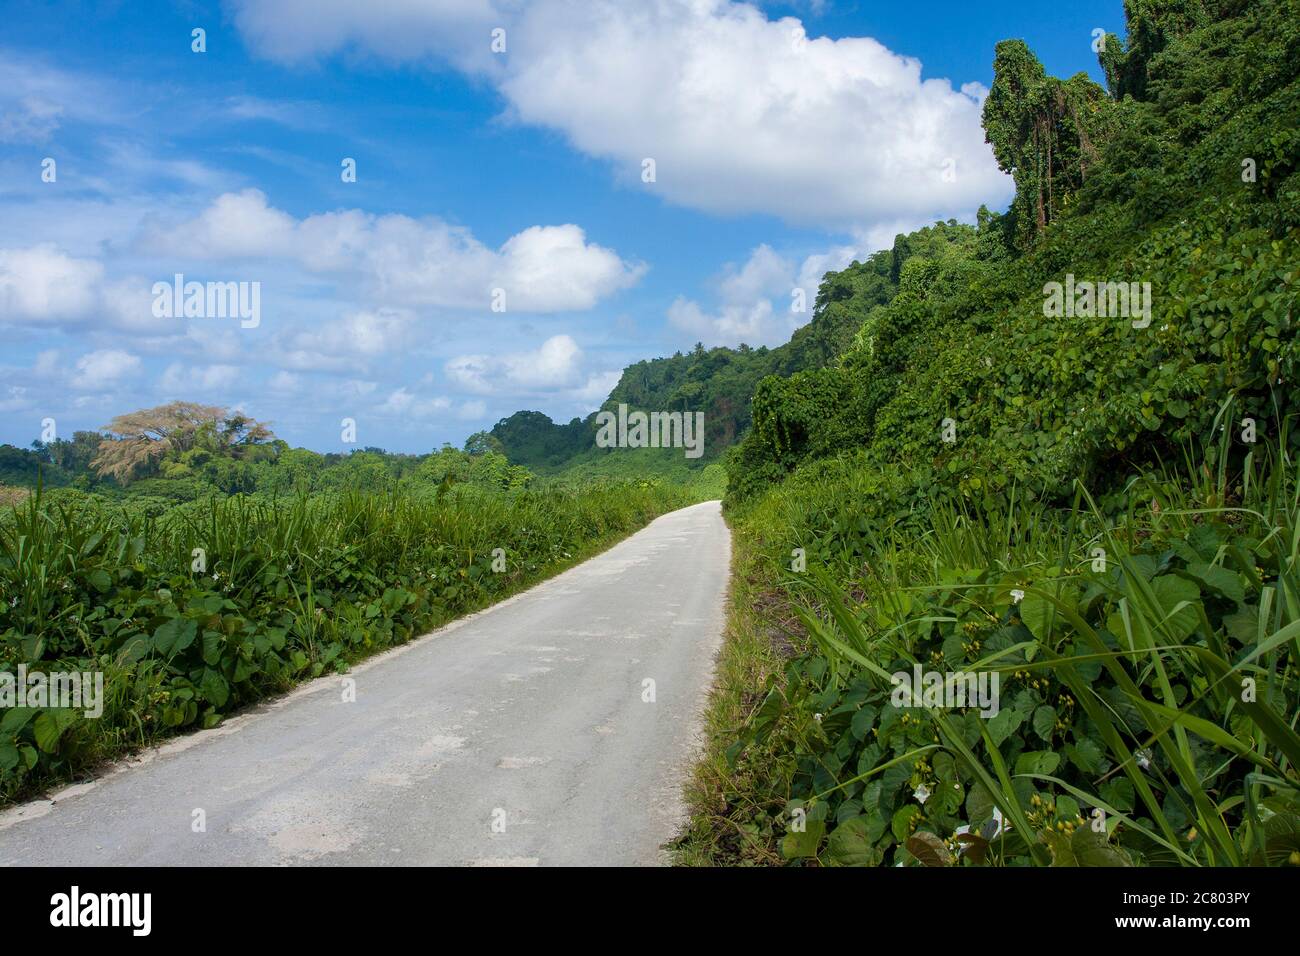 Endlose Straße ins Nirgendwo durch üppige grüne Vegetation Stockfoto